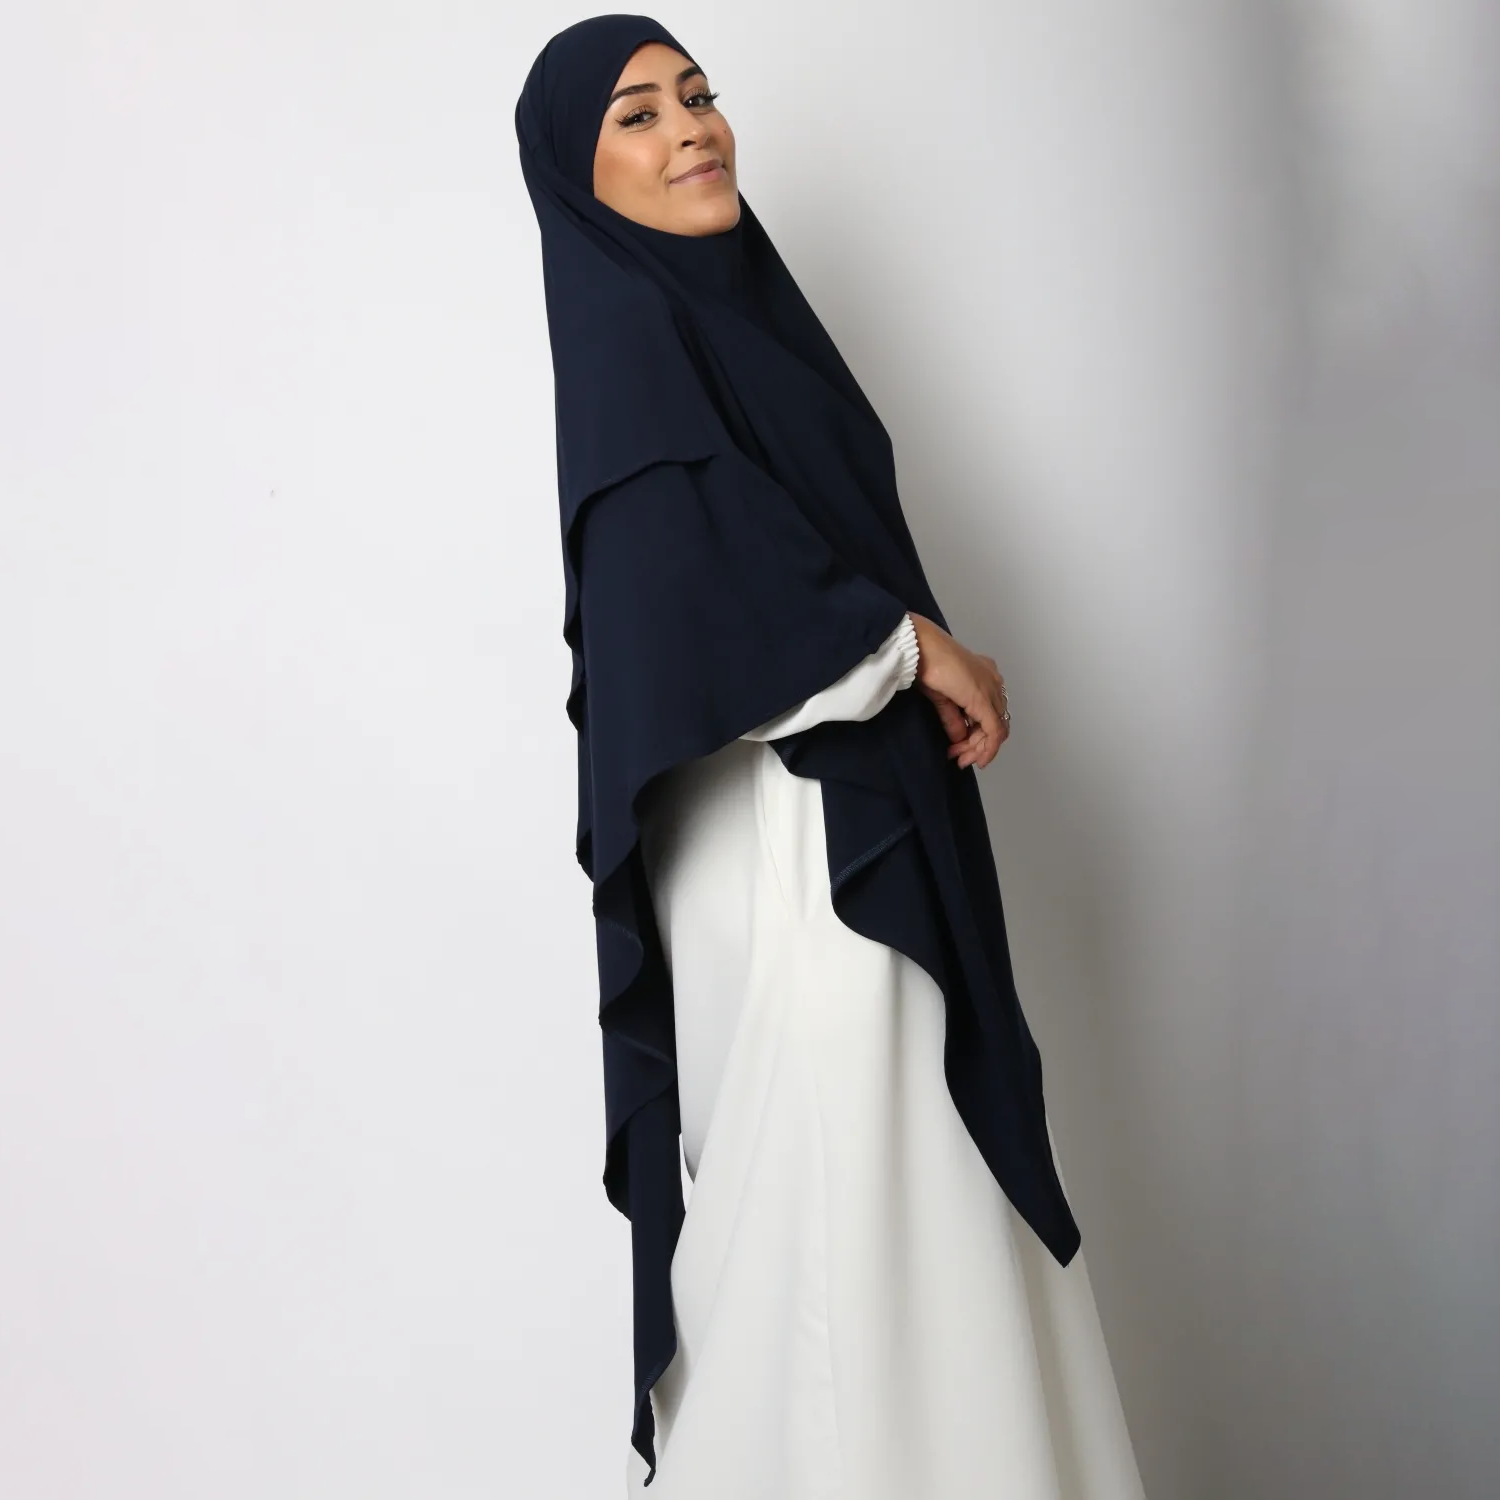 Khimar : 2 Layer Triangular Diamond Instant Khimar-Hijab-Jilbab for Girls & Women in Navy Blue Color | Tie Back Burkha Jilbab Khimar Style Abaya Hijab Niqab Islamic Modest Wear